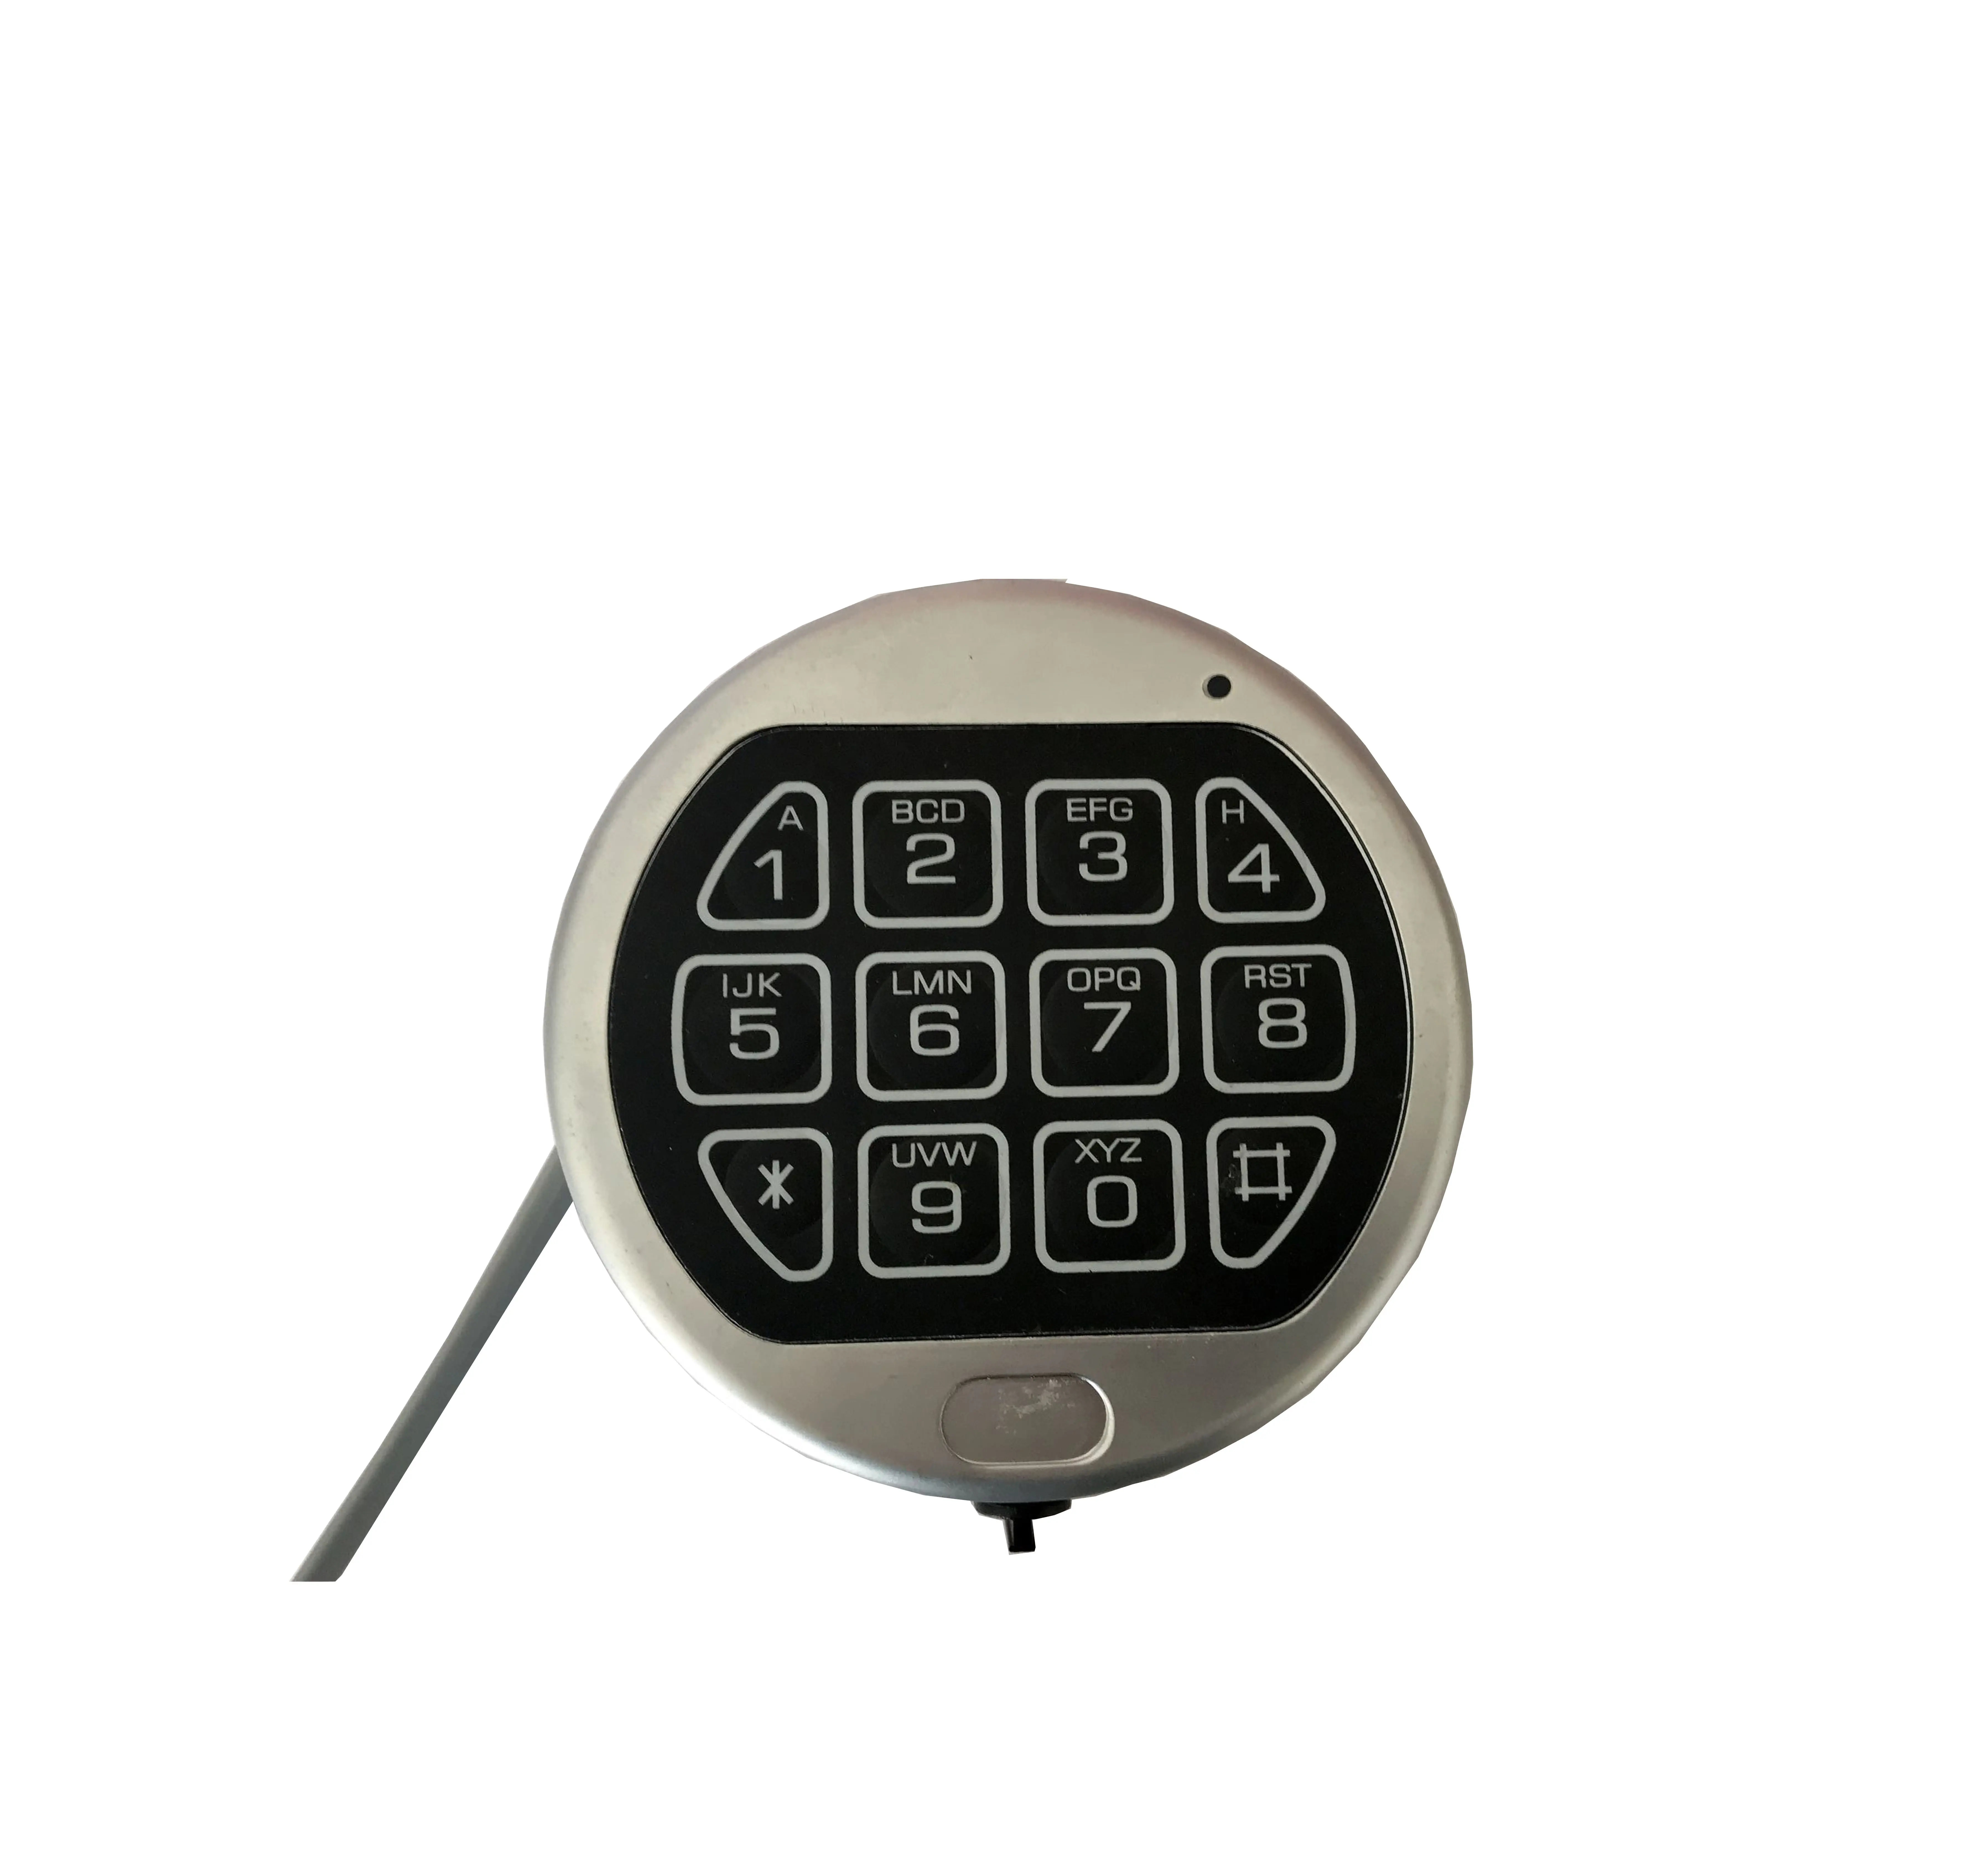 Harga Produsen LS-021 Kunci Digital/Lampu Kunci Kombinasi Elektronik dengan Cipher untuk Kotak Aman, Kabinet Senapan/Campuran Seng